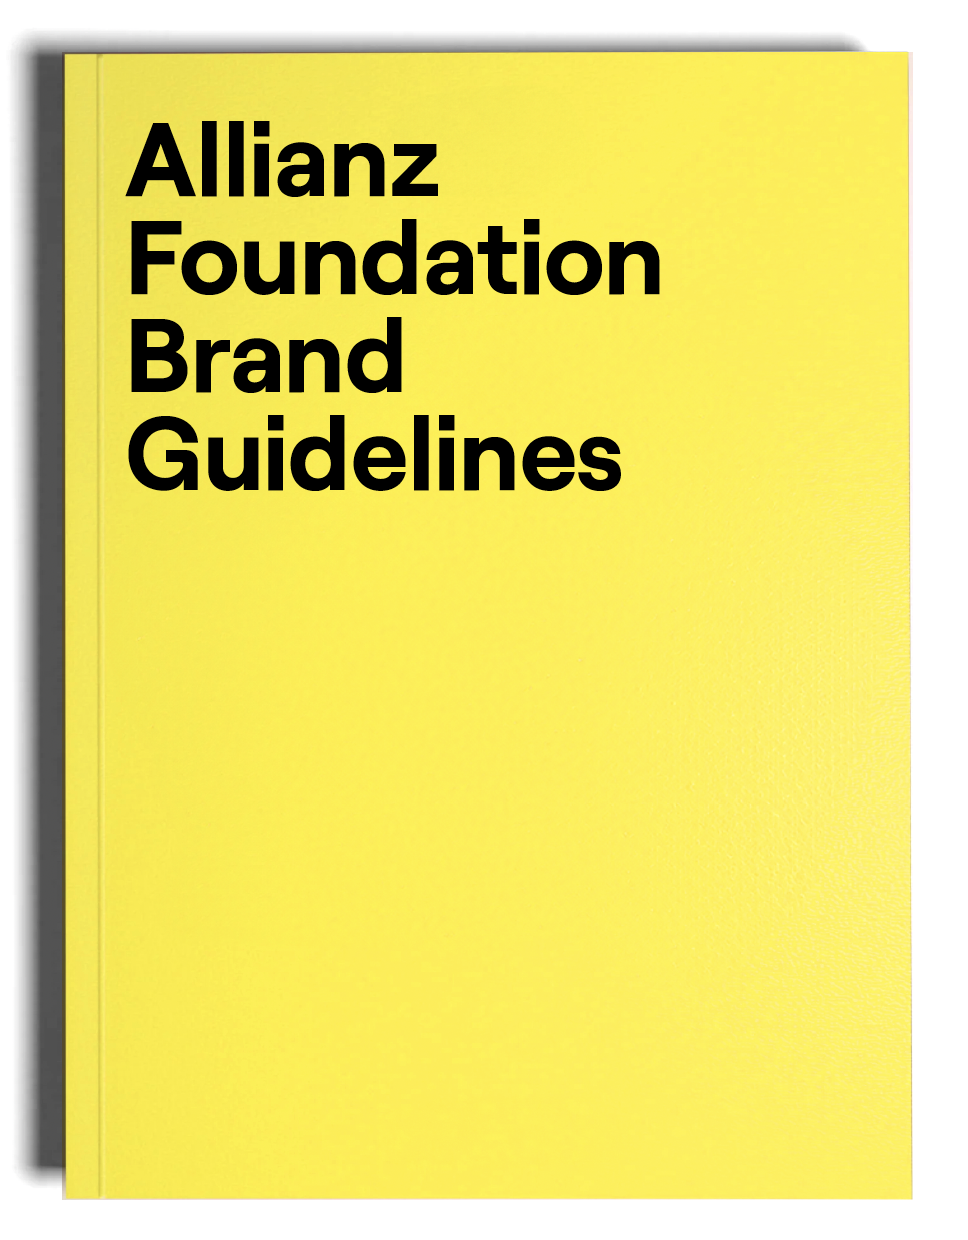 Allianz Foundation: Corporate Identity